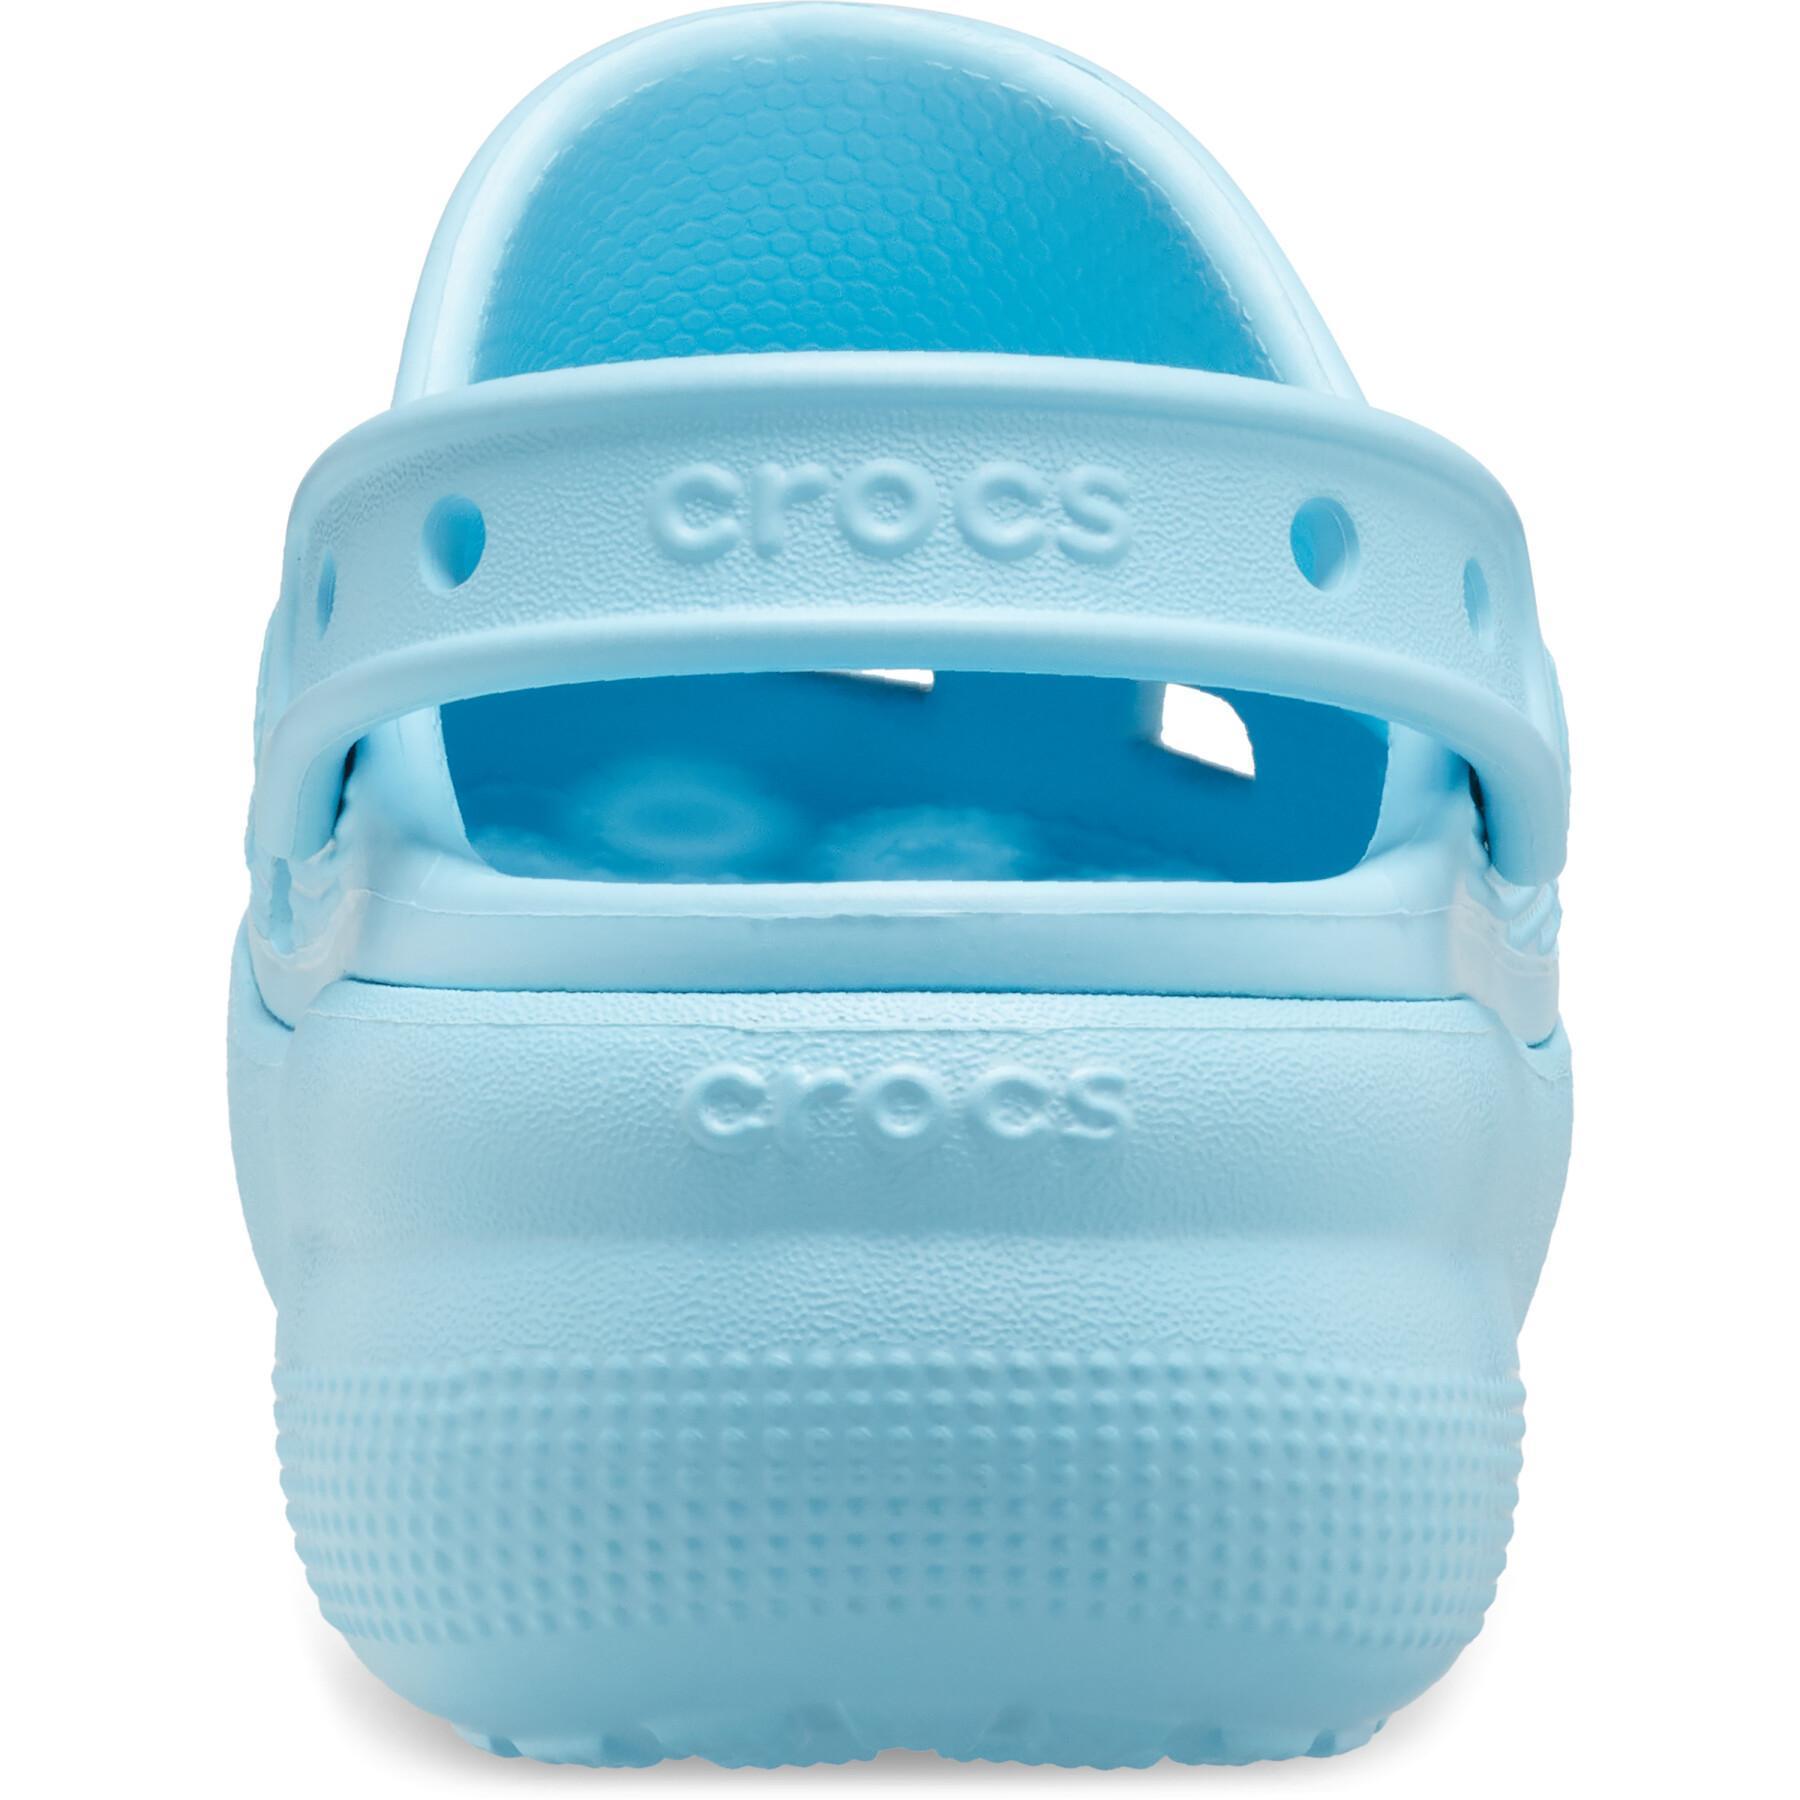 Children's clogs Crocs Cutie Crush